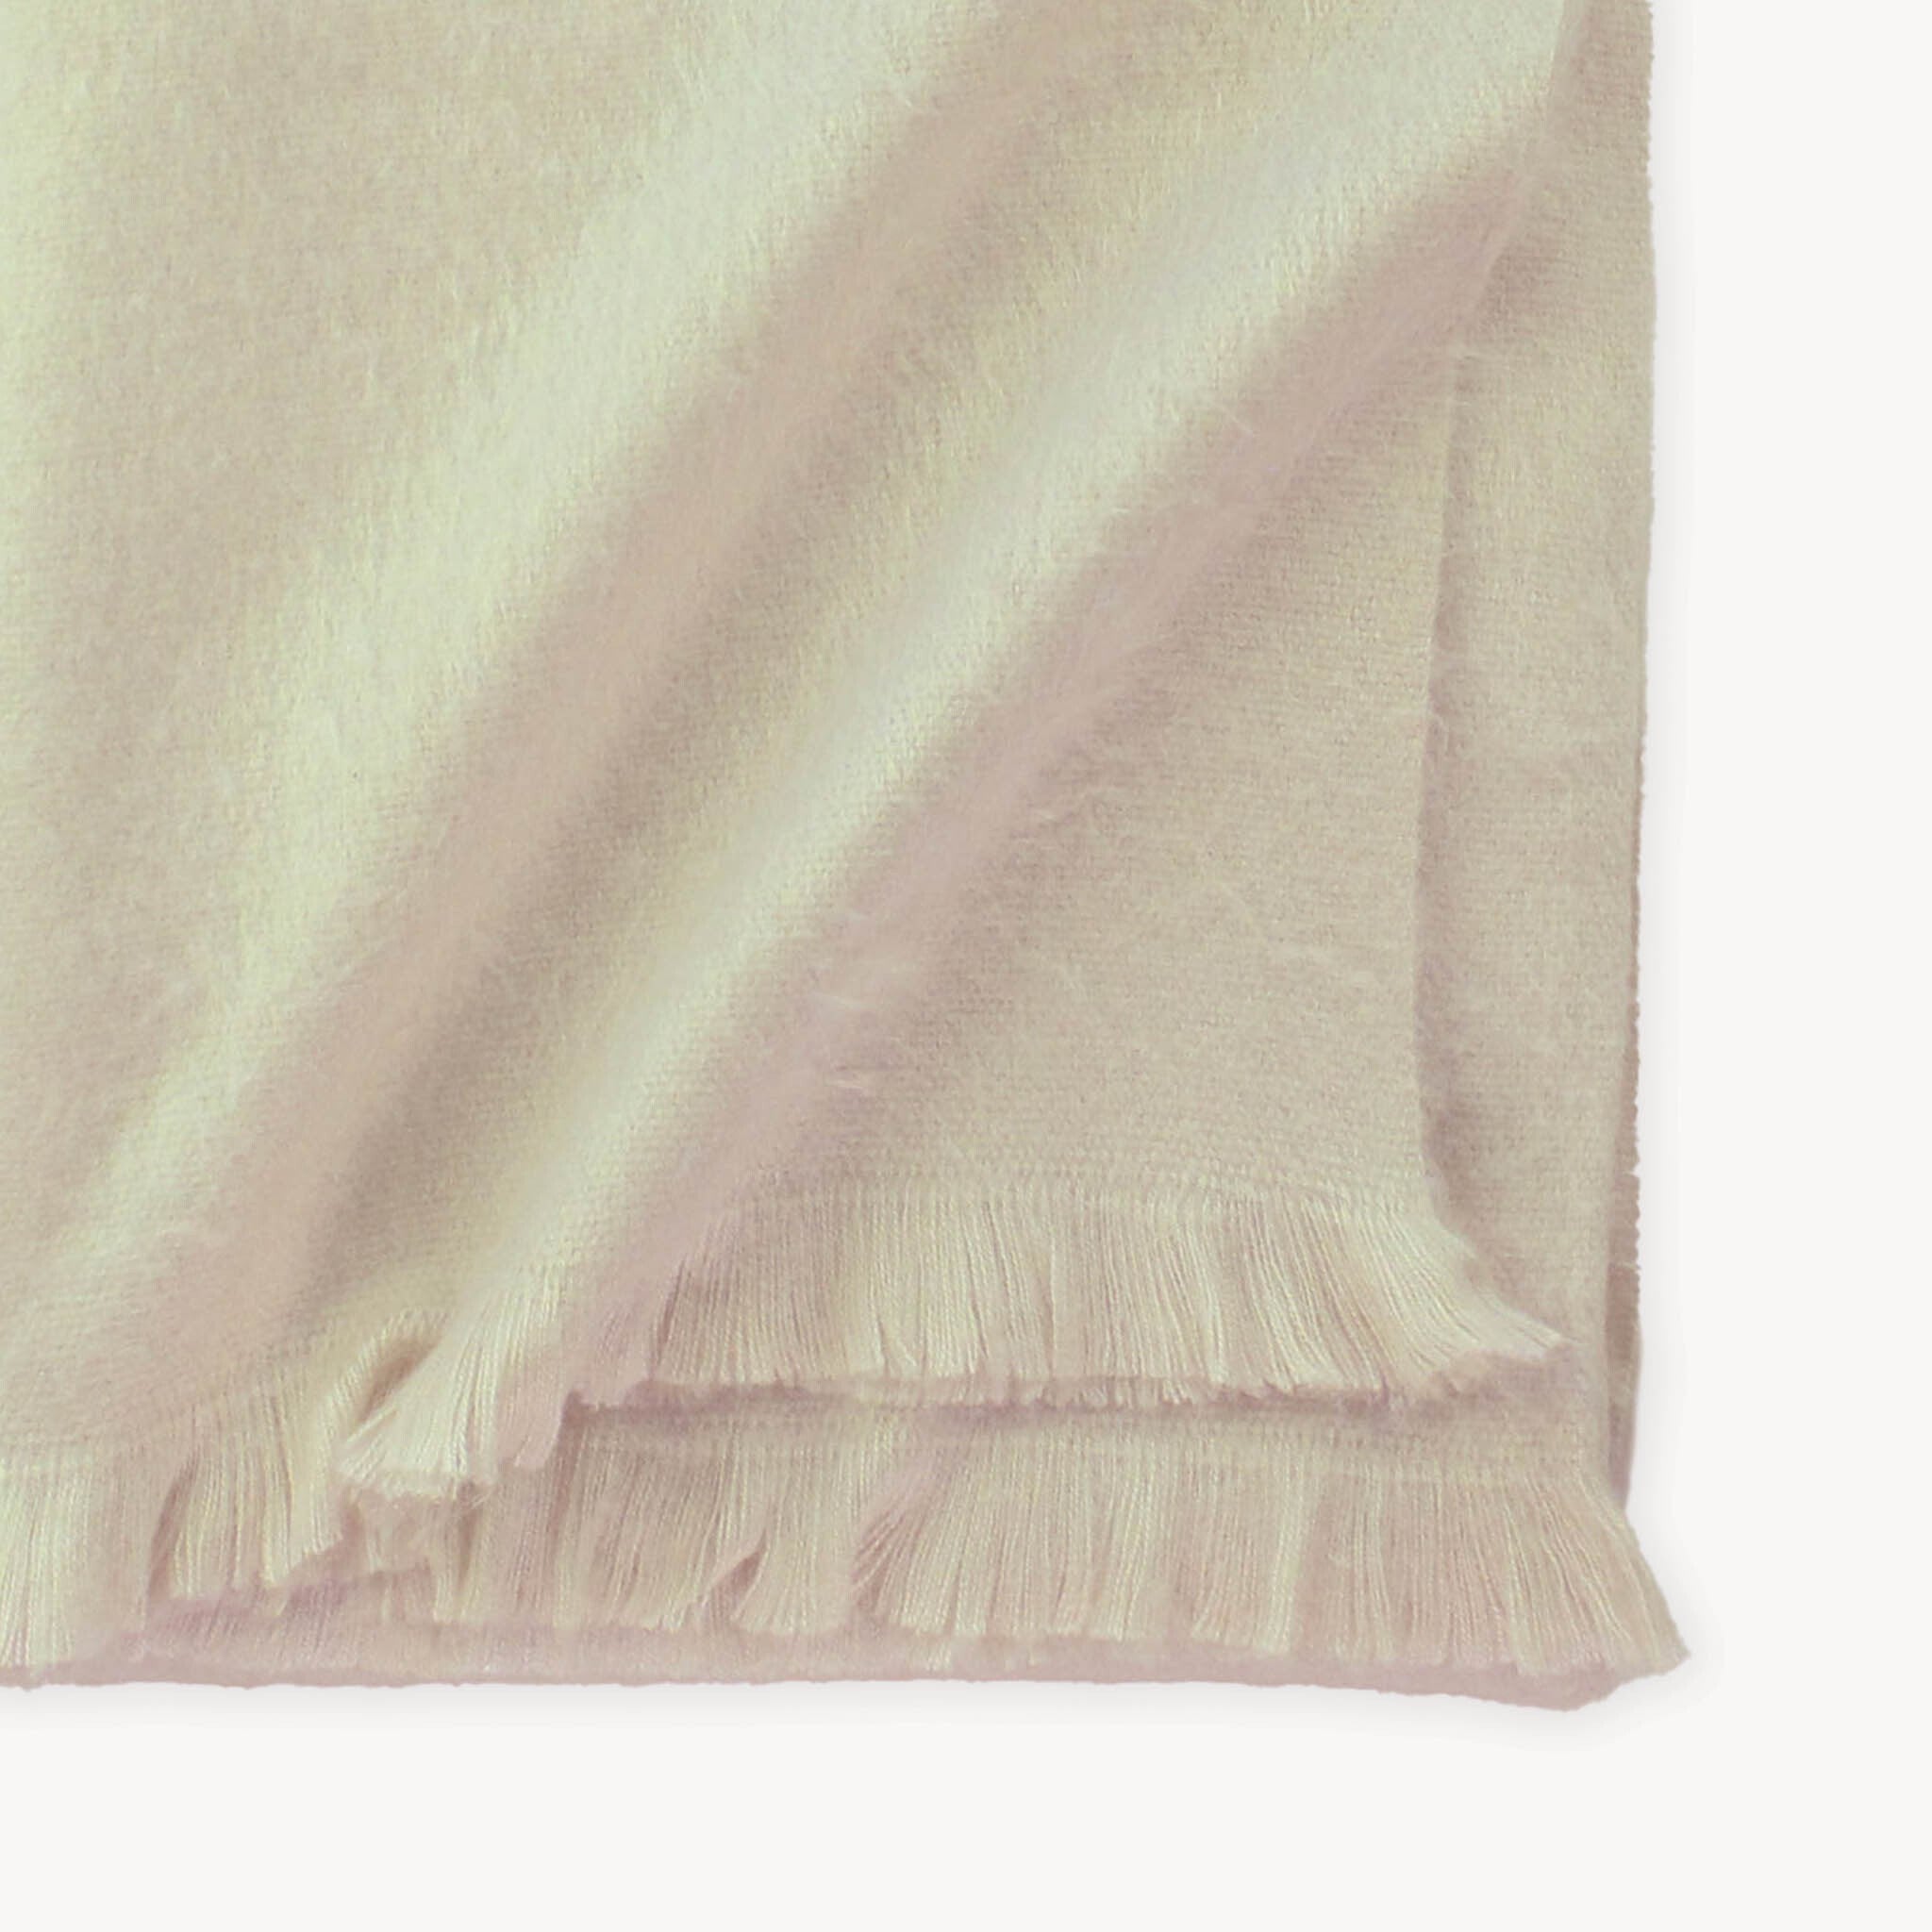 Banjara Sofa Throw - Woven Fringed Multi Coloured Blanket – Allure Bath  Fashions